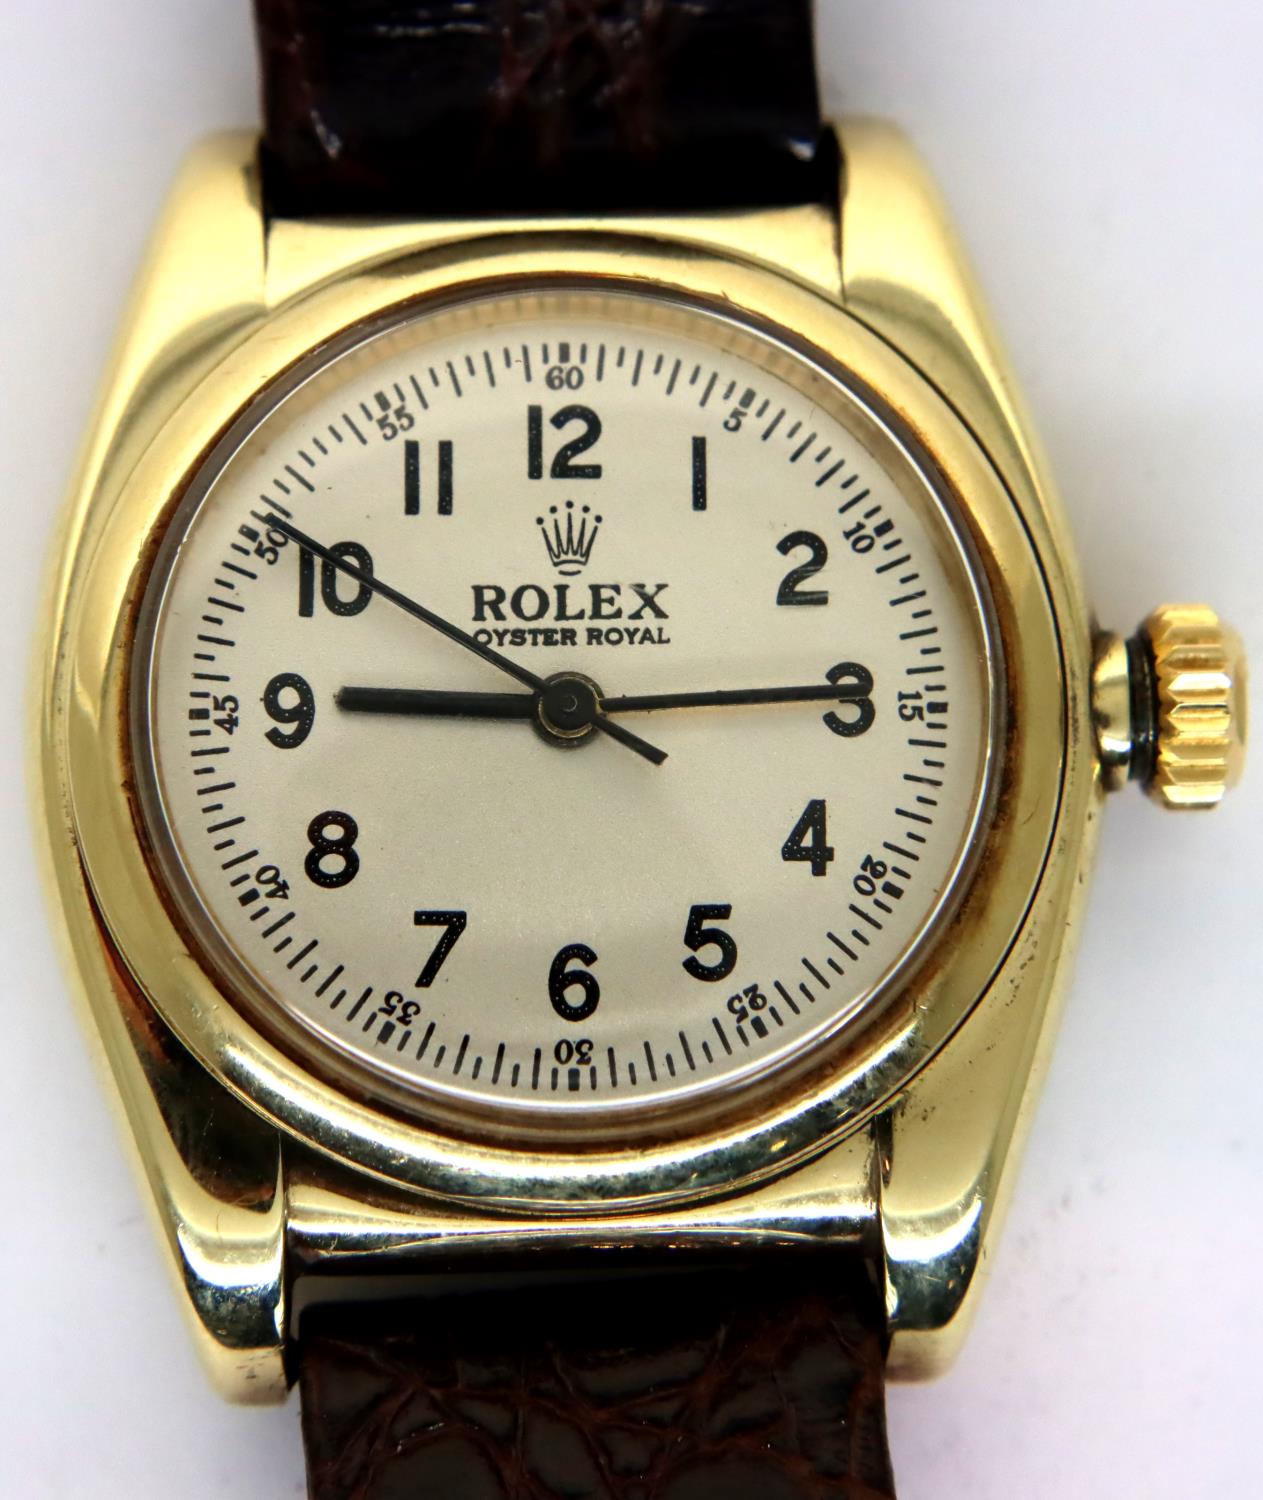 Rolex; gents 9ct gold vintage gentlemans wristwatch. Model Rolex Oyster Royale, Viceroy. Recent